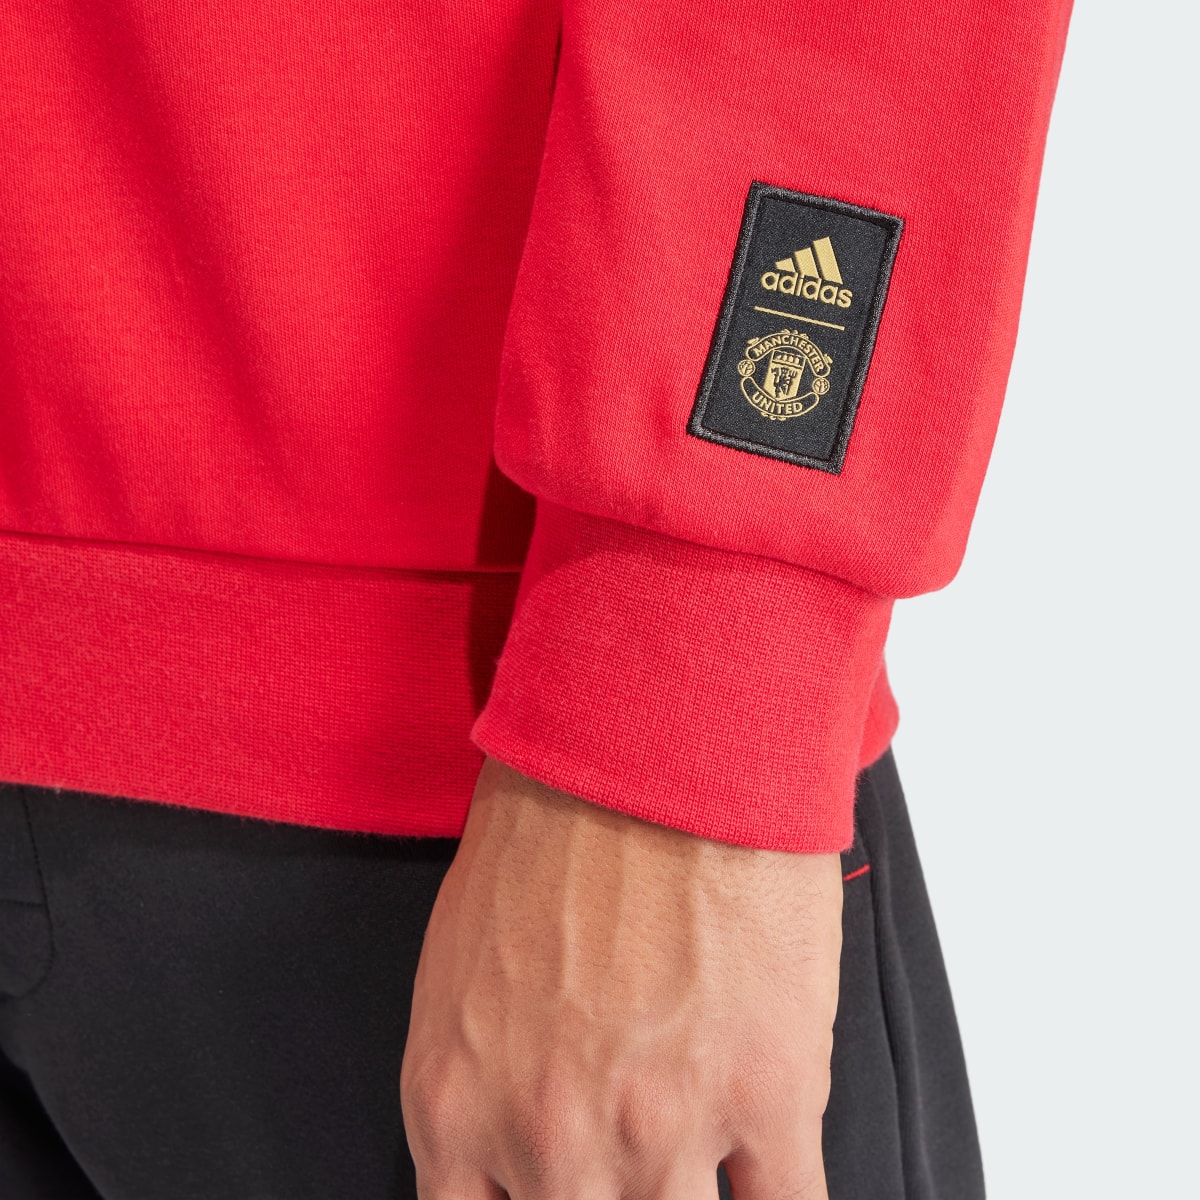 Adidas Sweatshirt Cultural Story do Manchester United. 6